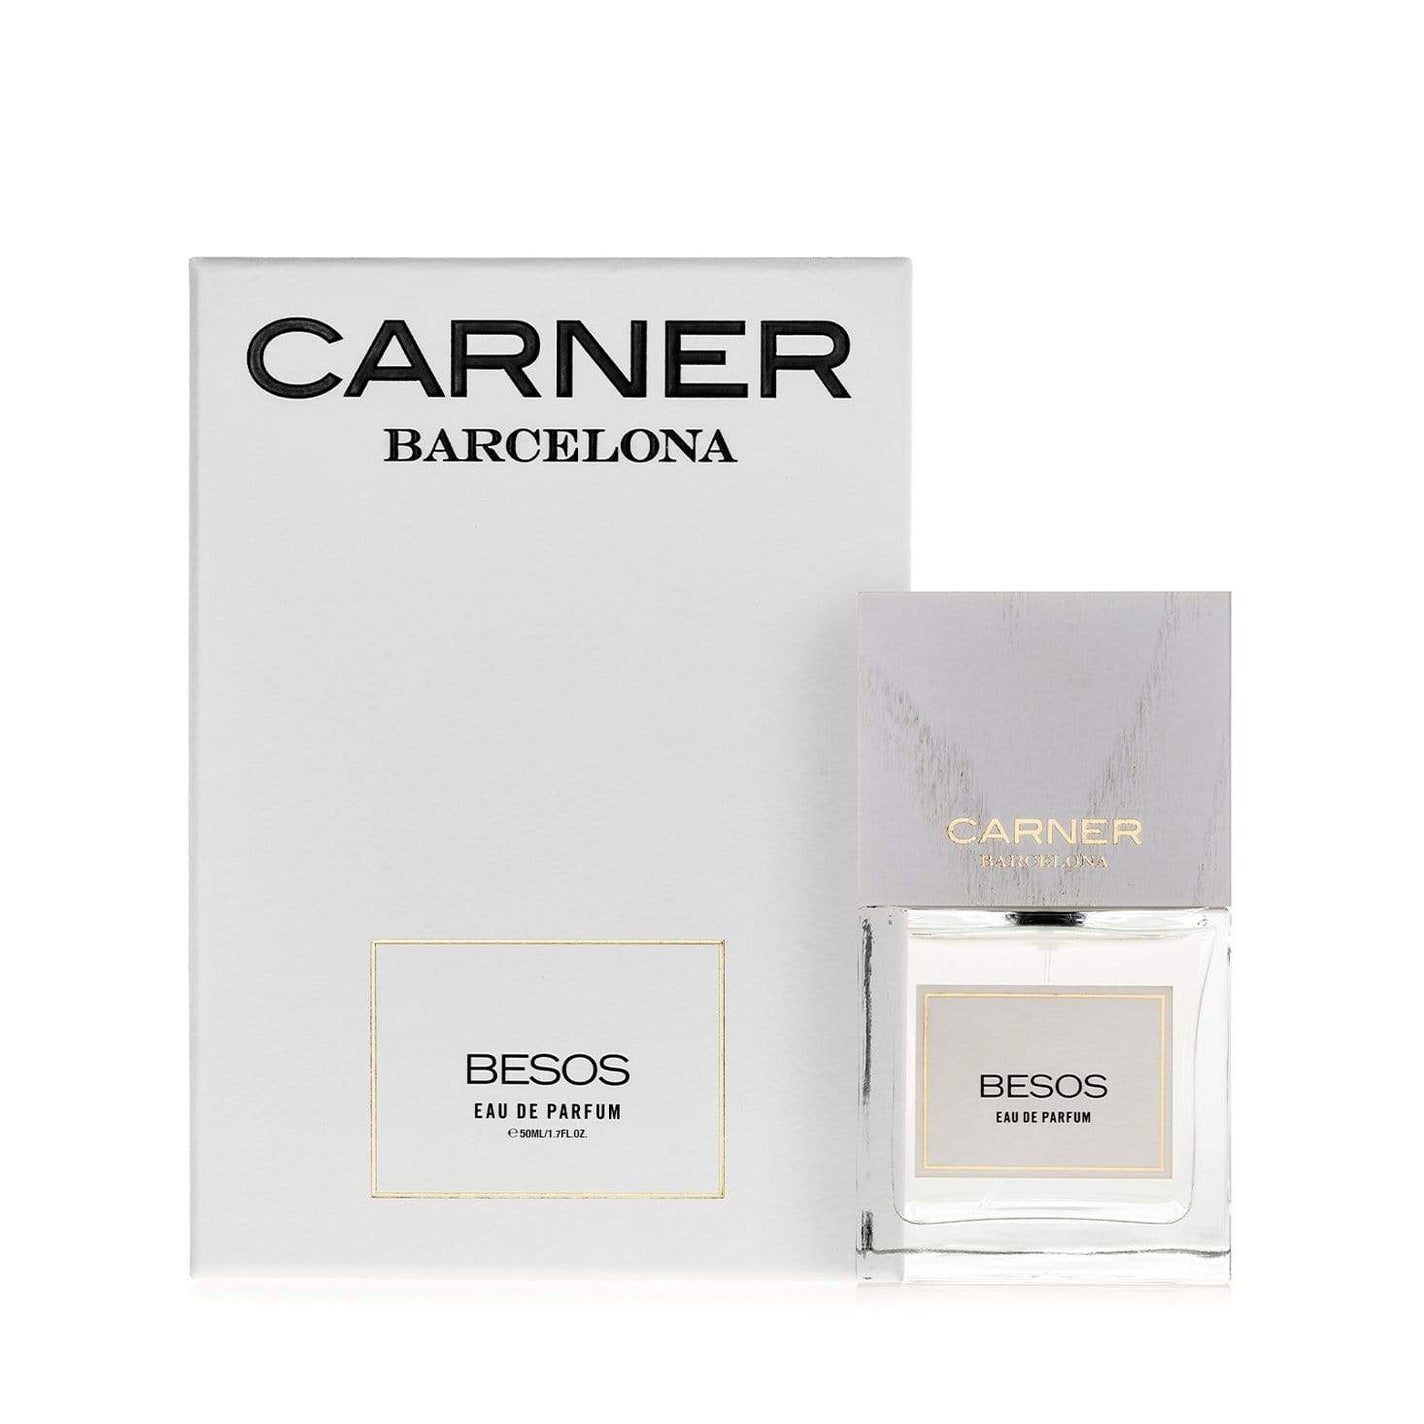 CARNER BARCELONA Besos Eau de Parfum - 50ml